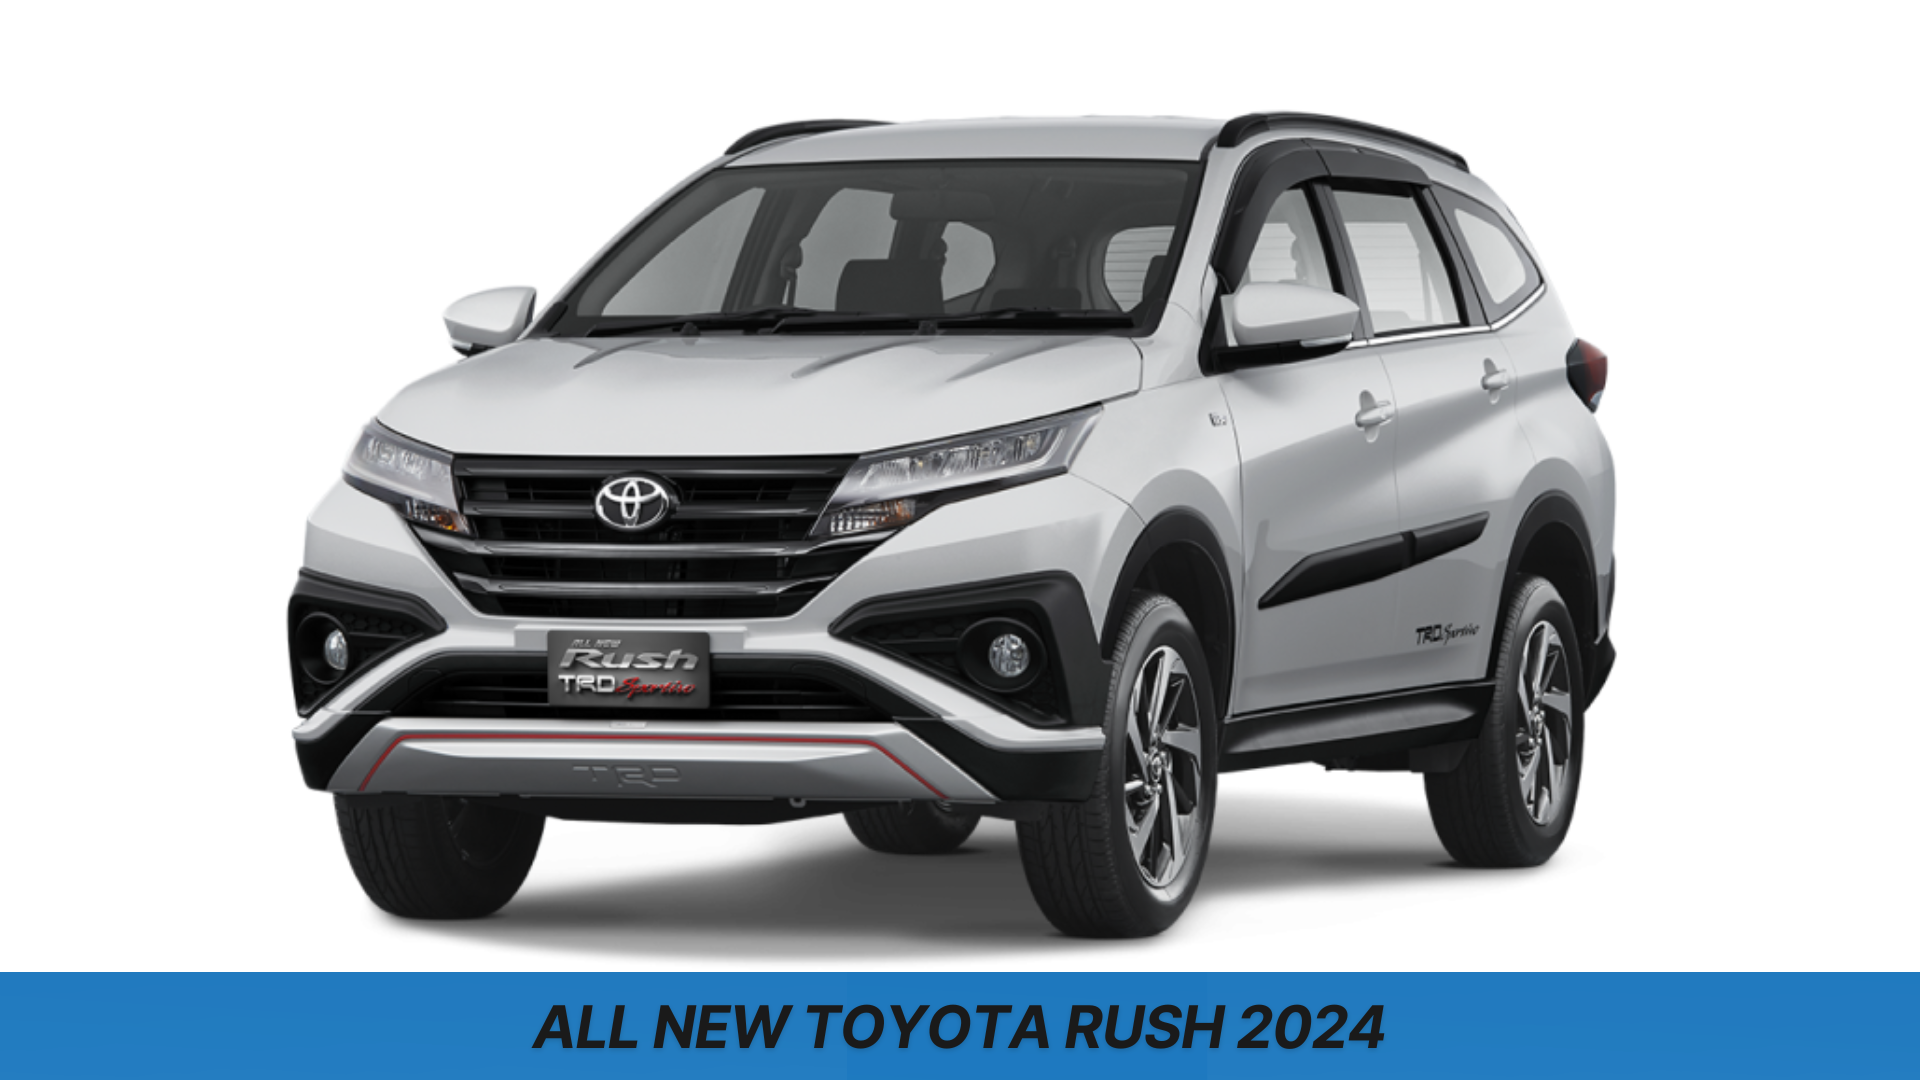 All New Toyota Rush 2024, Punya Desain Futuristik dan Menarik Pasti Pas Buat Mudik Lebaran